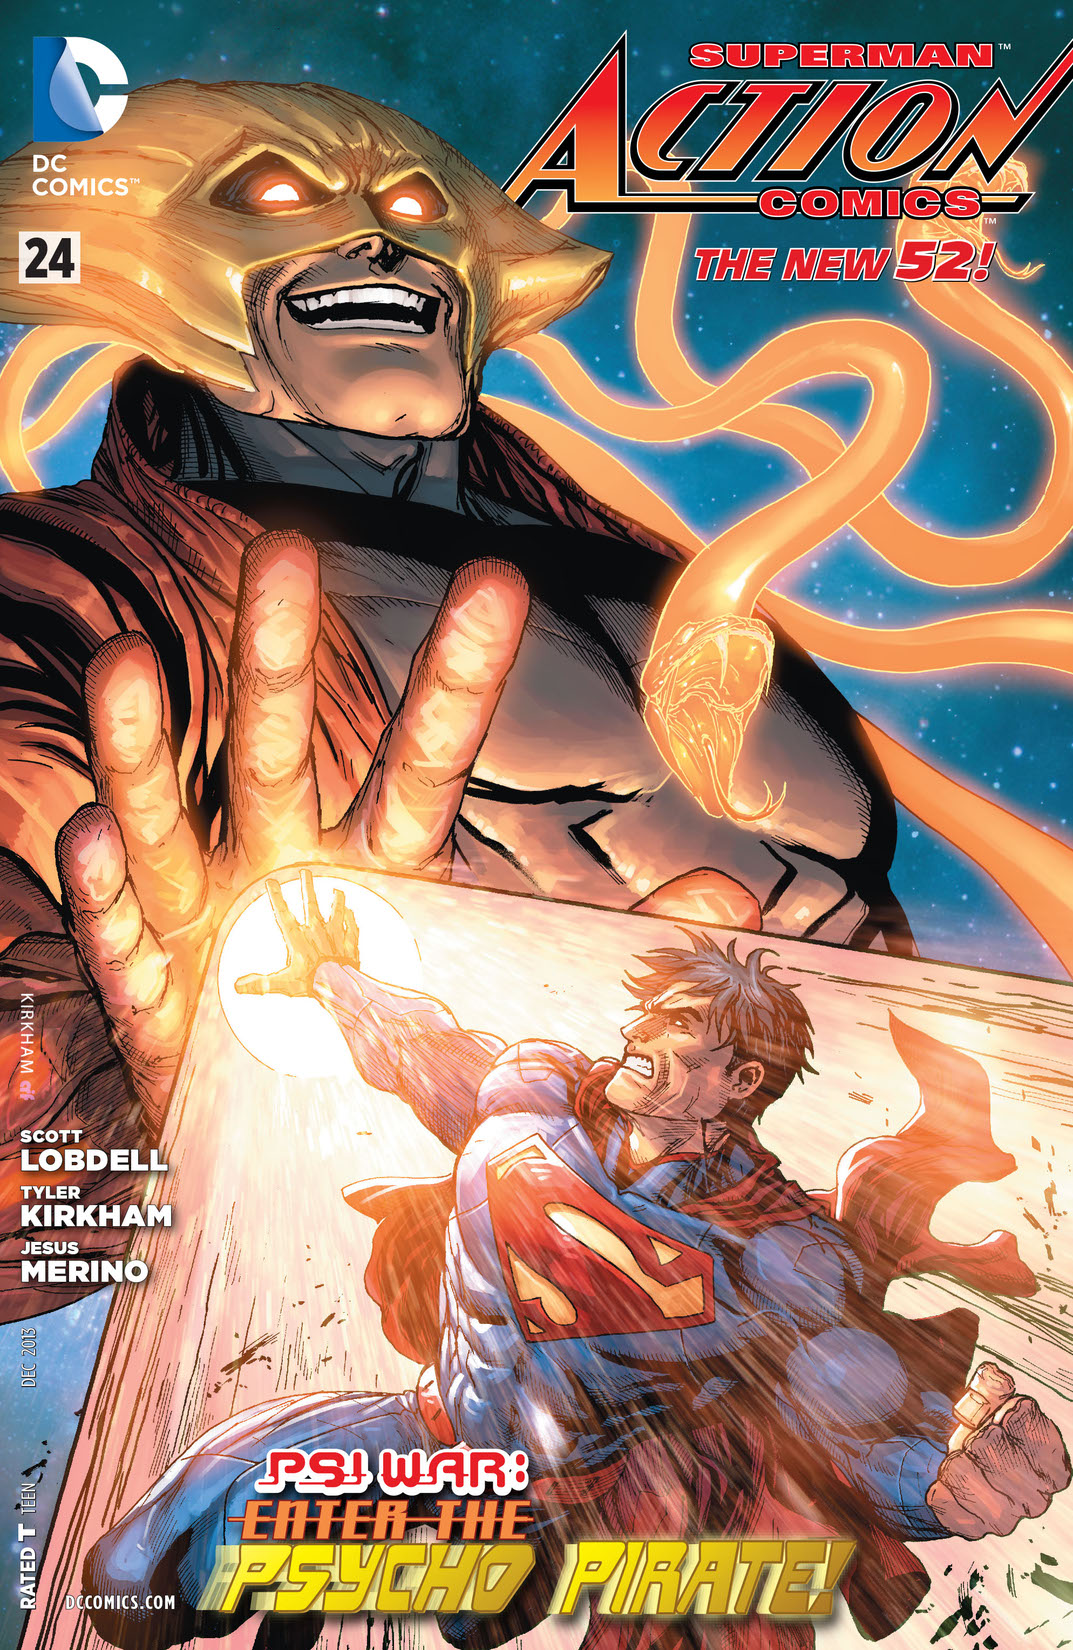 Action Comics (2011-) #24 preview images